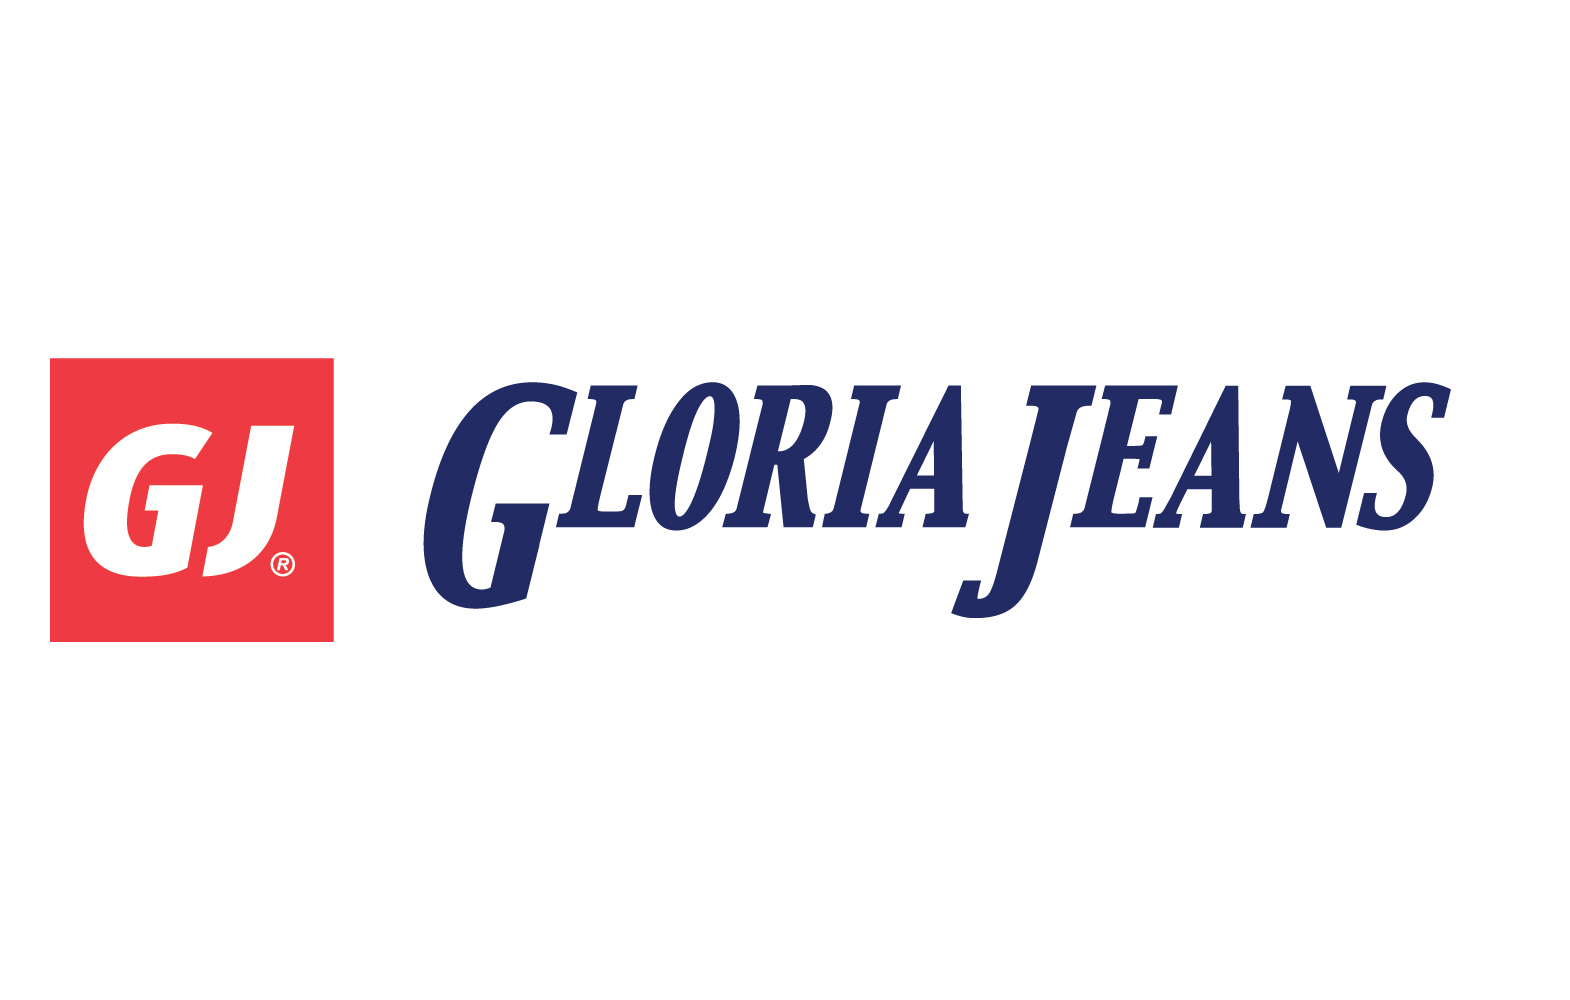   . - 50%!  14.03! Gloria Jeans!  ! ,  , , , !   05/22